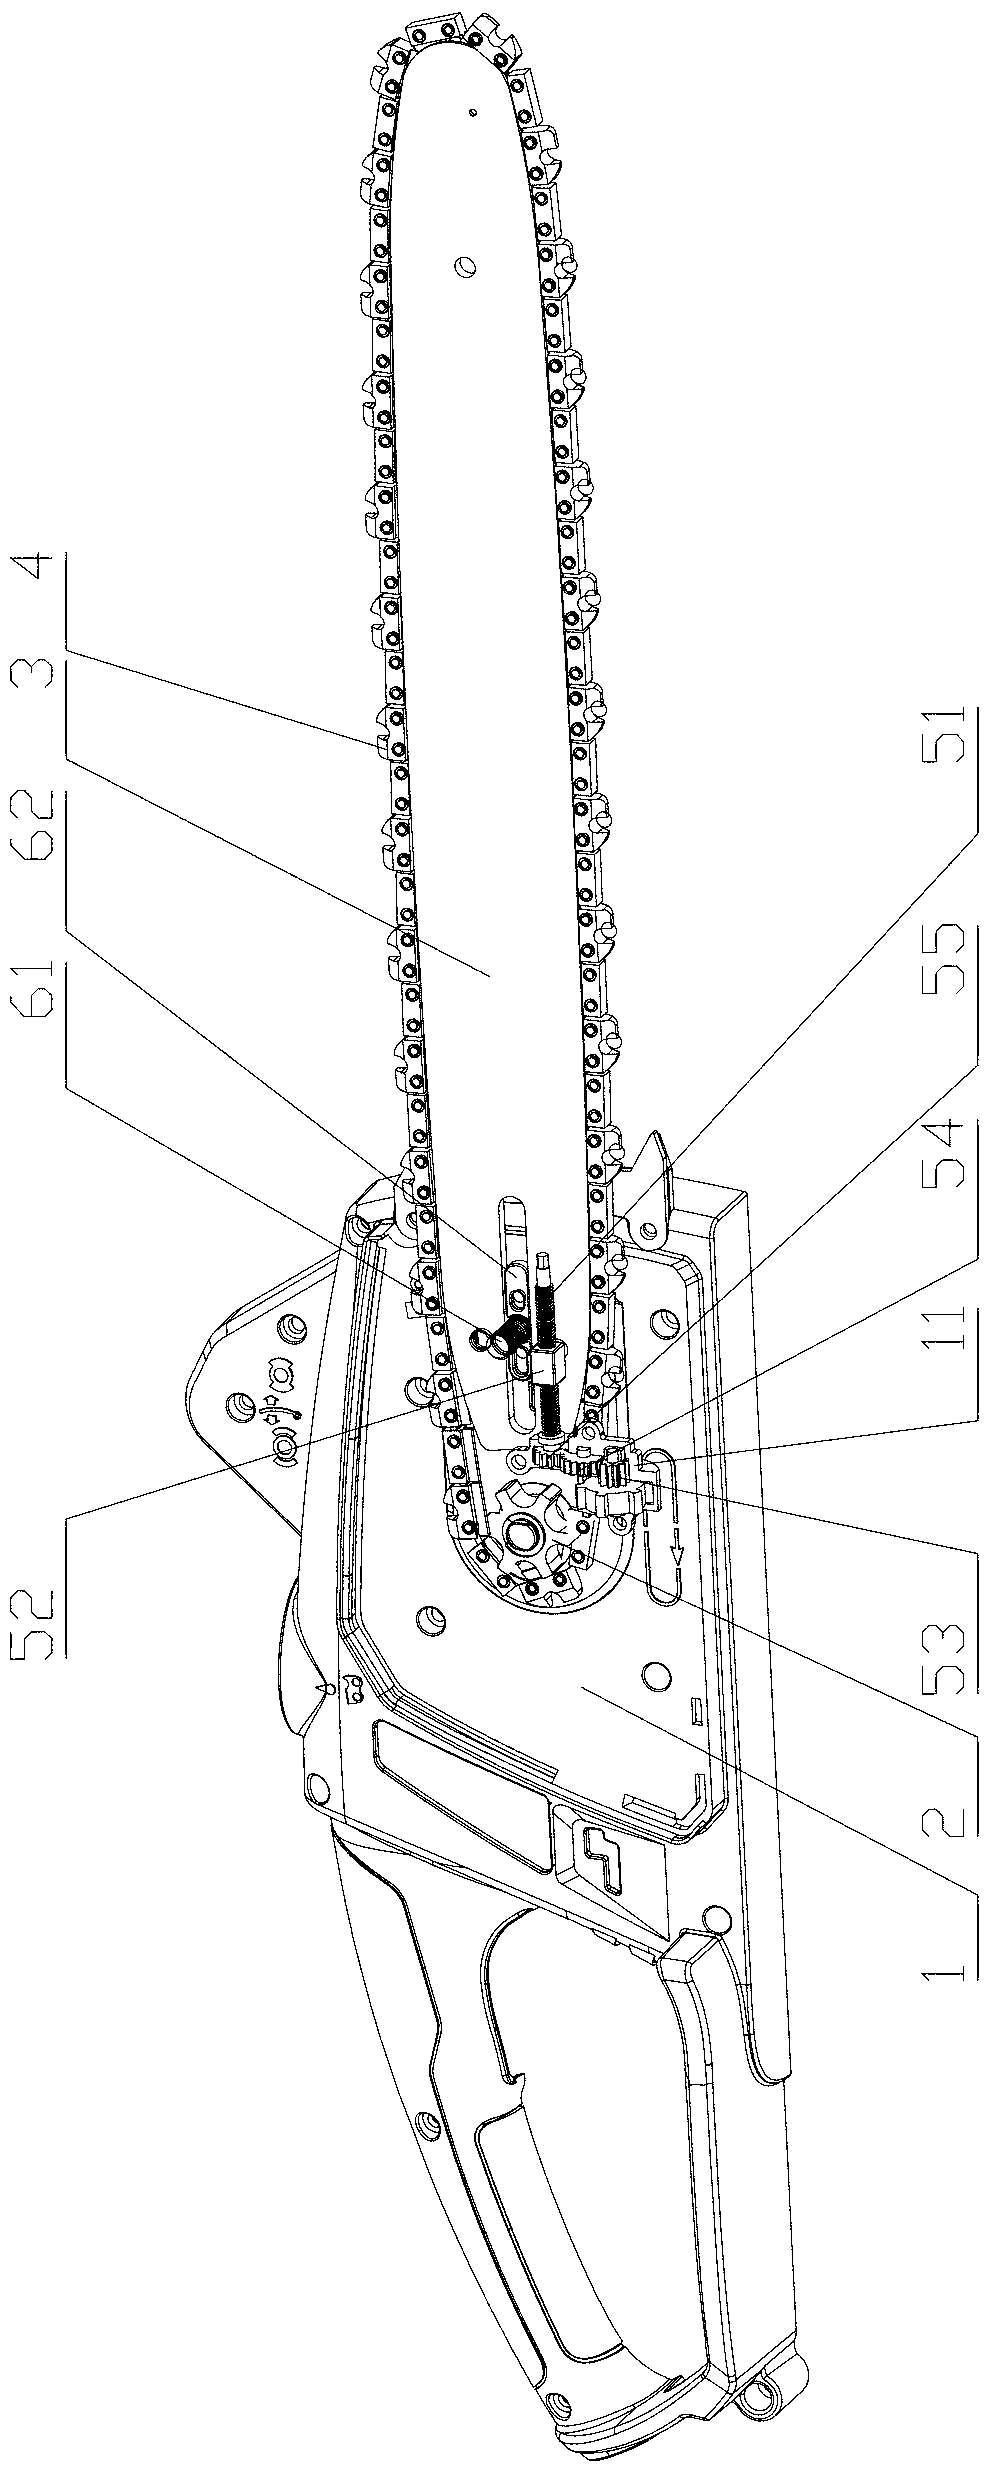 Electric chain saw chain tightness adjusting device